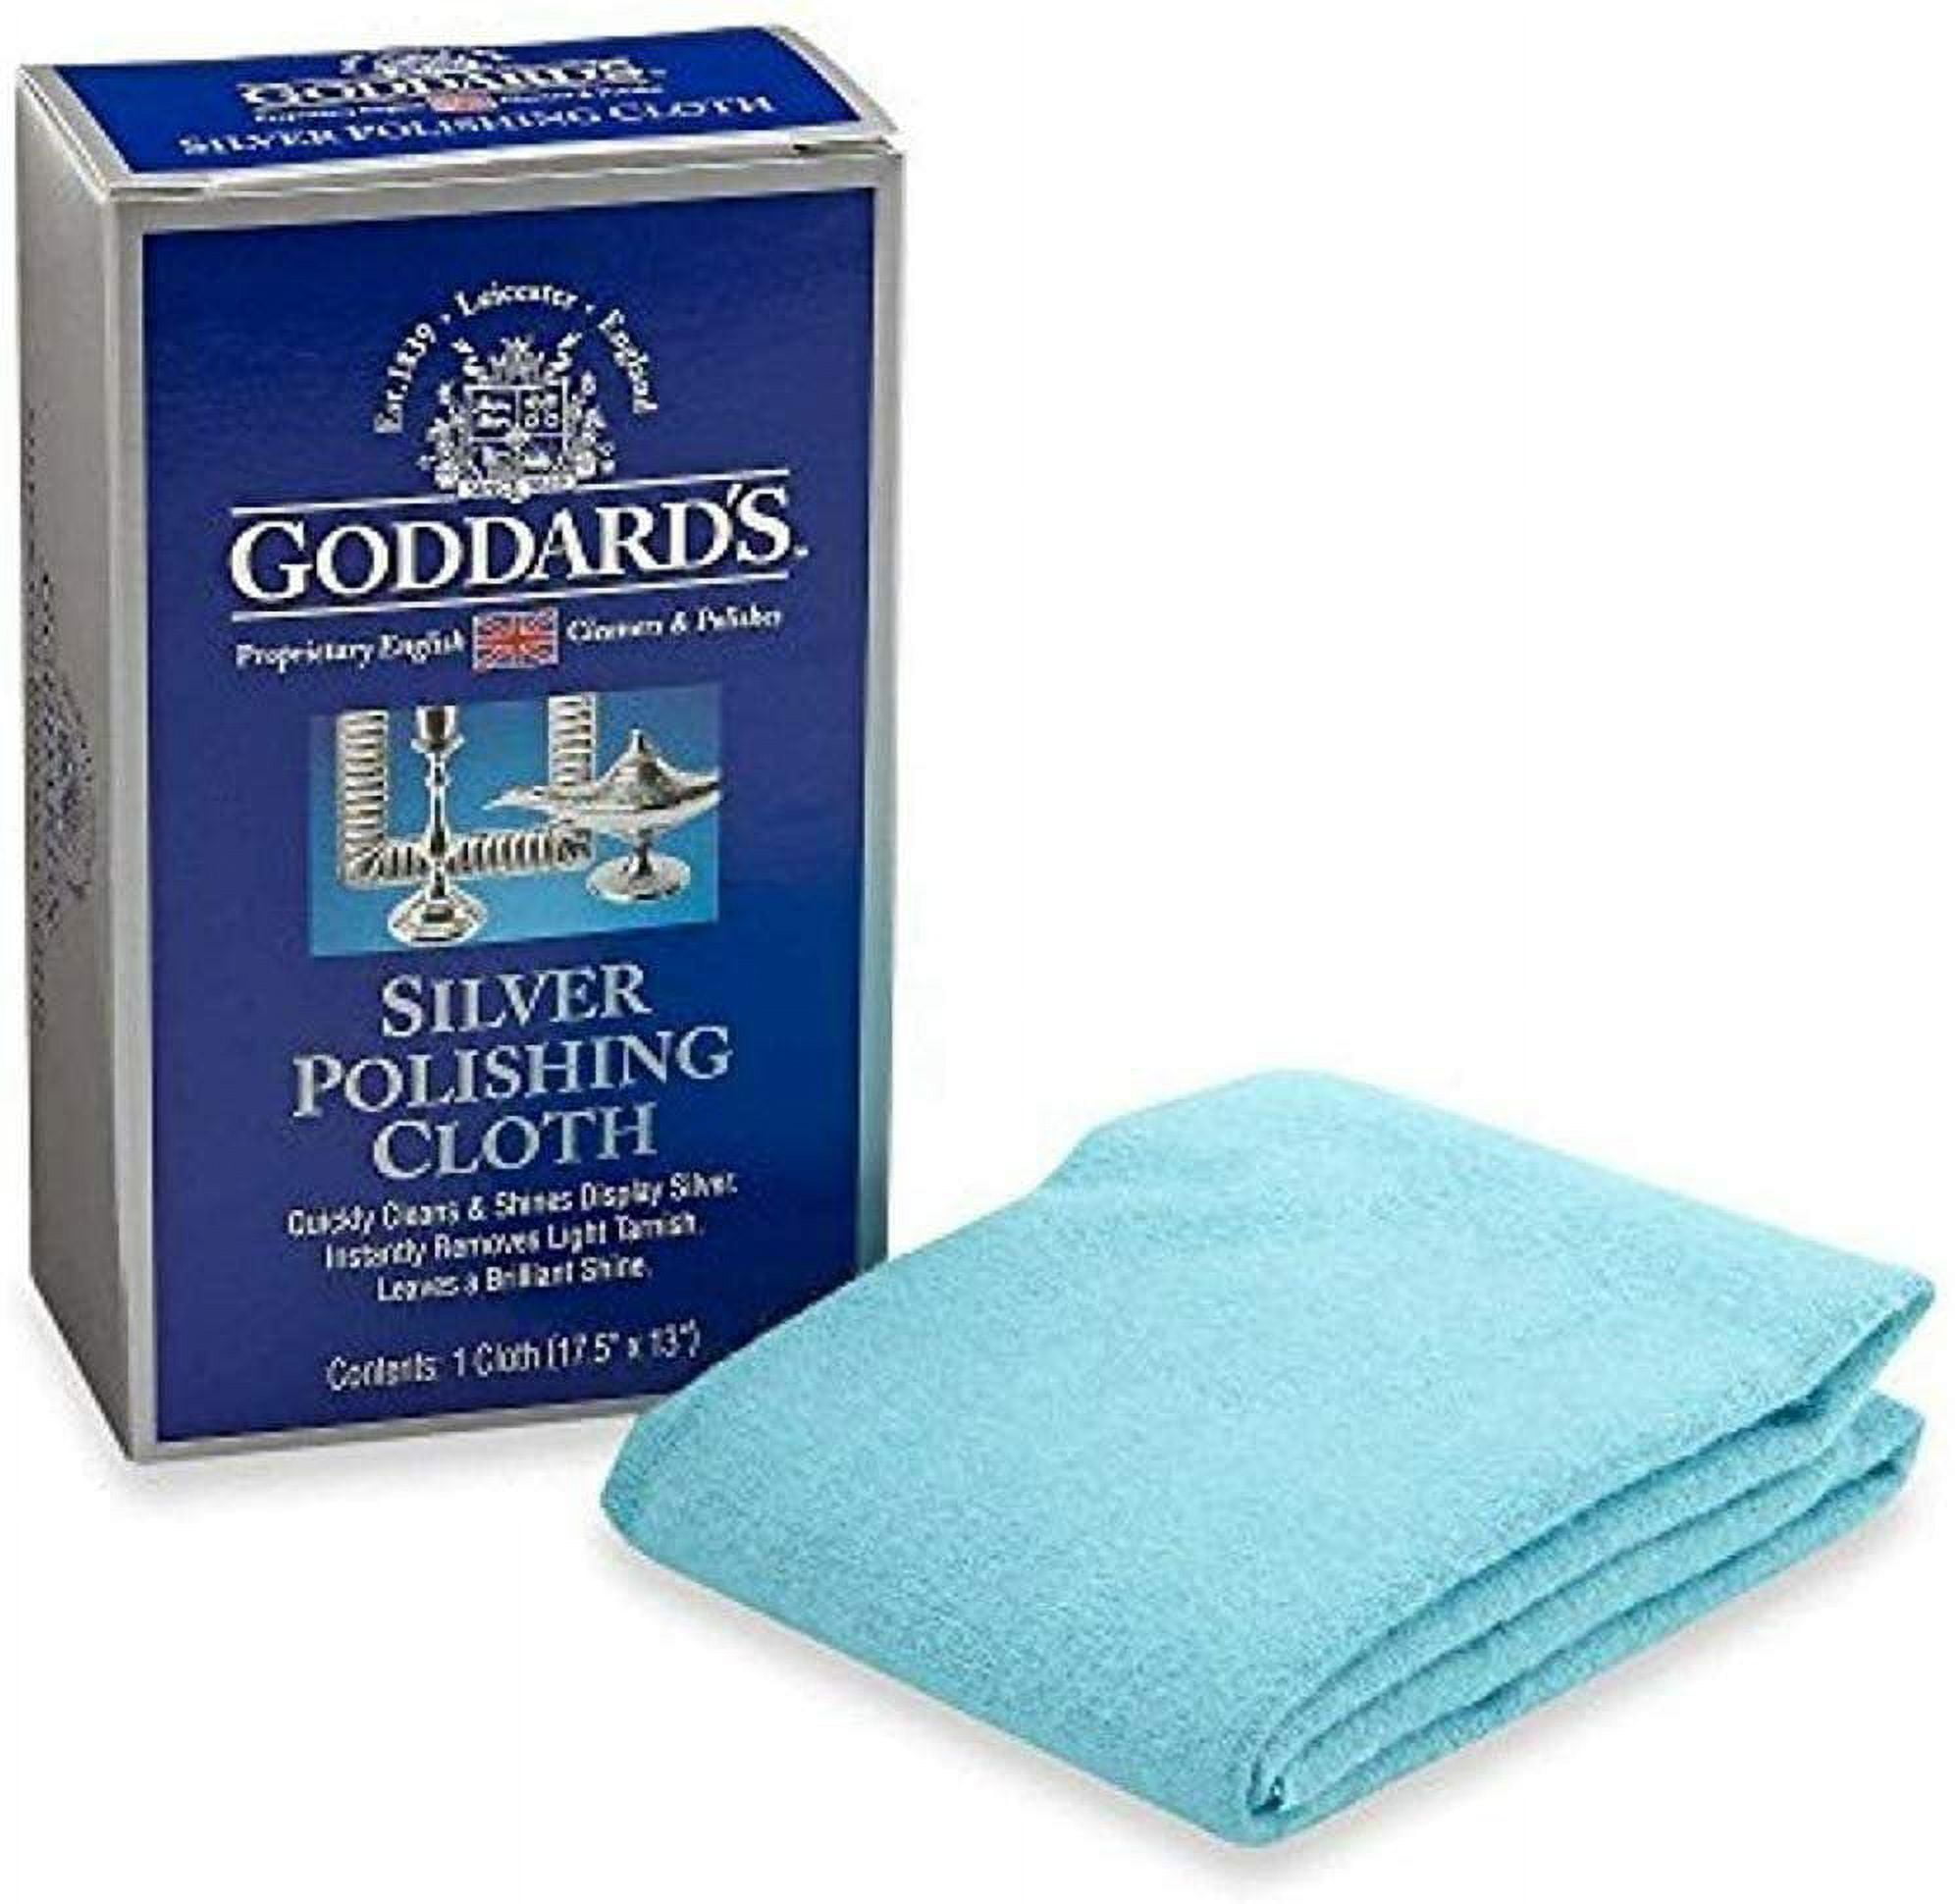 Goddard's Silver Polishing Cloth, Pack of 2 